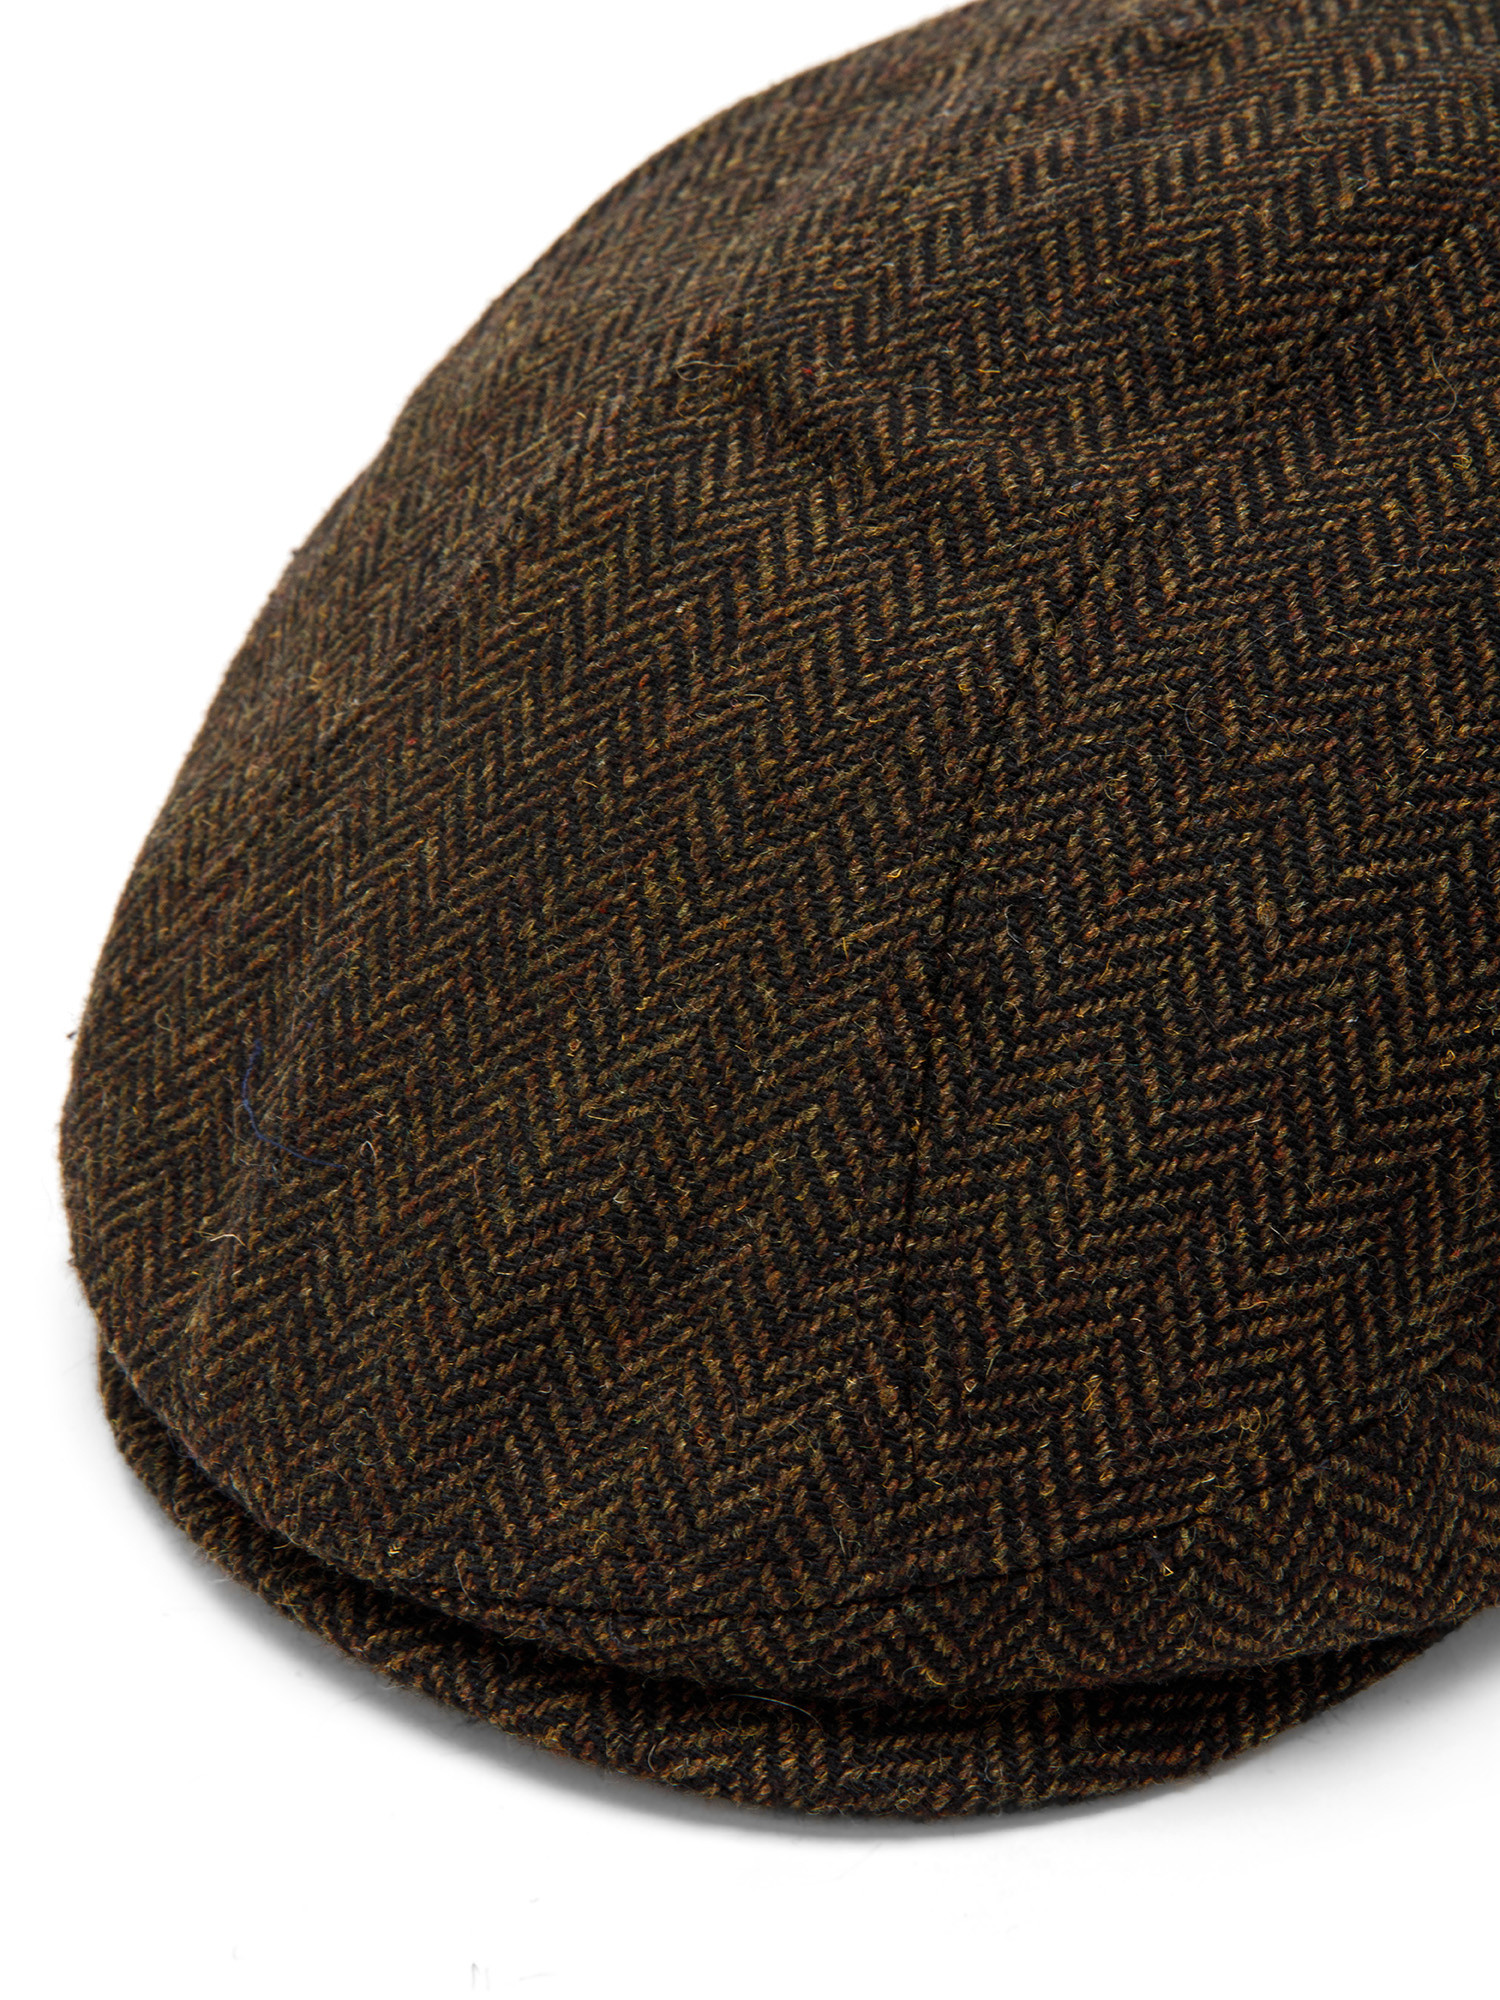 Luca D'Altieri - Flat cap in herringbone fabric, Brown, large image number 1